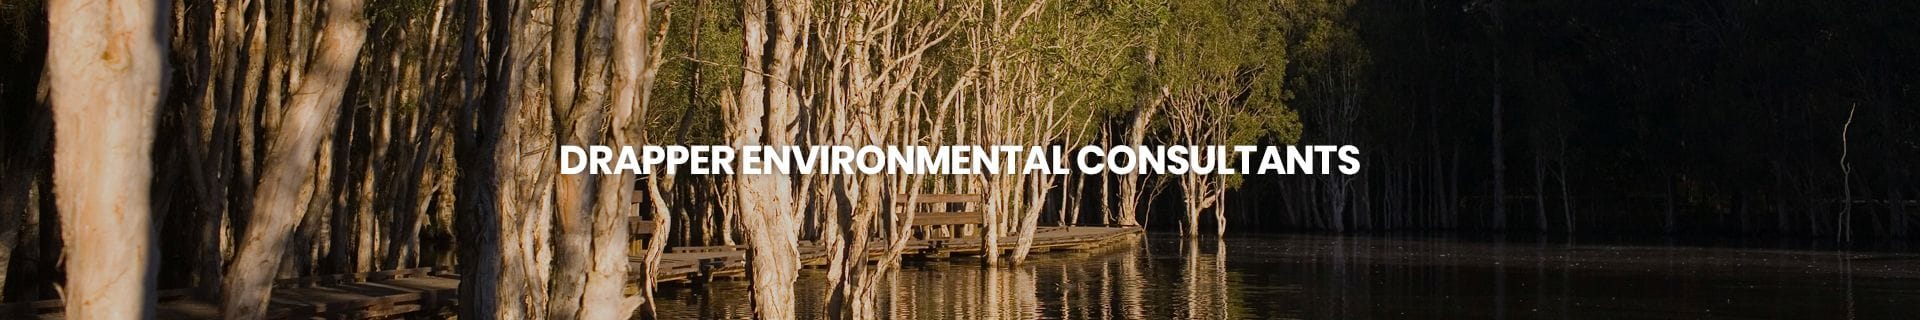 Drapper Environmental Consultants Website Banner